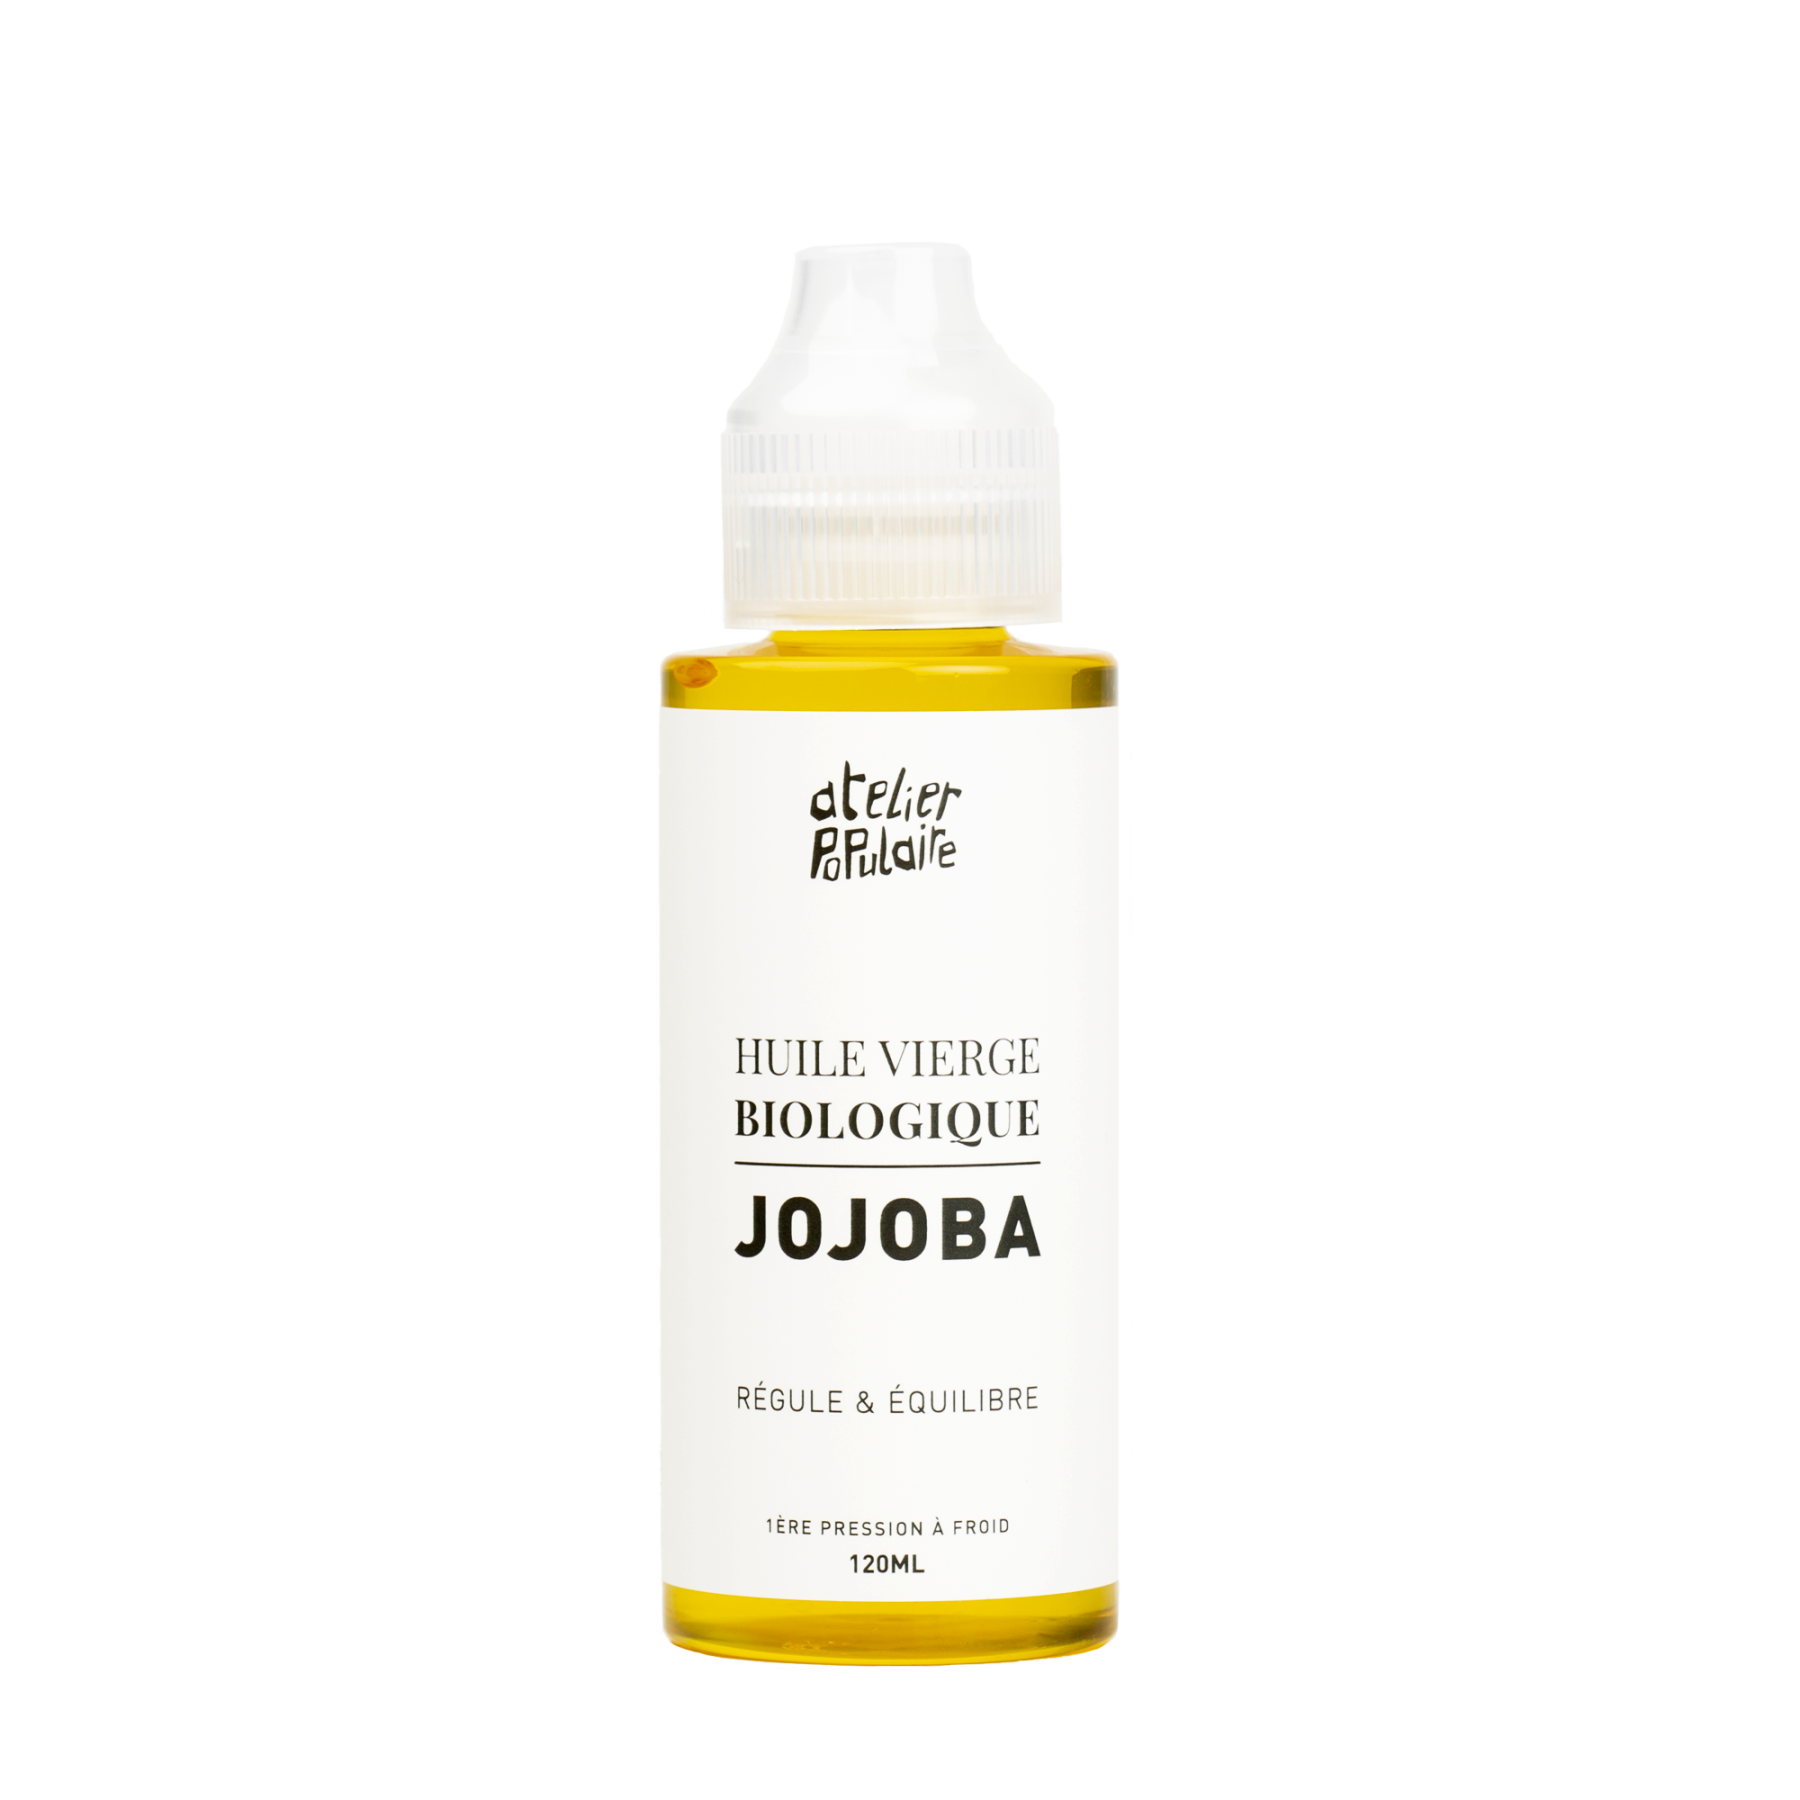 Huile vierge de Jojoba certifiée bio - Atelier Populaire - 120ml